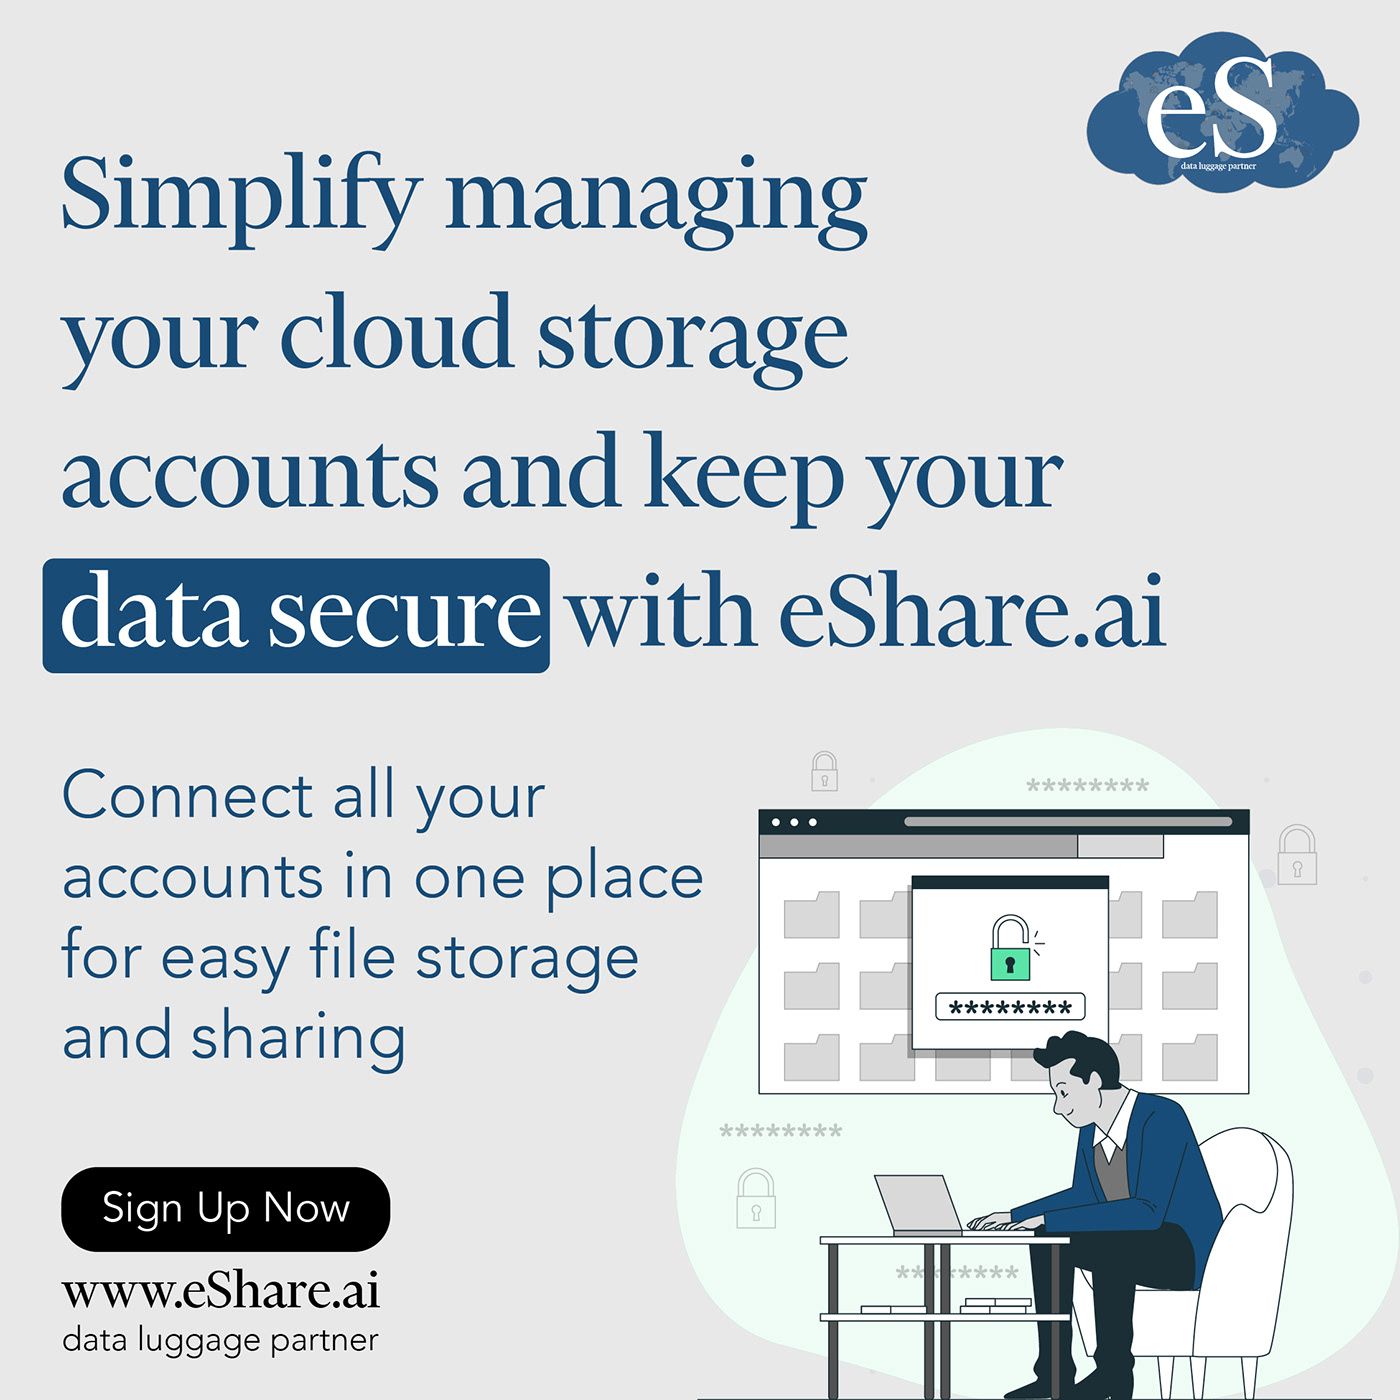 document storage cloud storage security Data efficiency organization Streamline integrity confidentiality secure storage